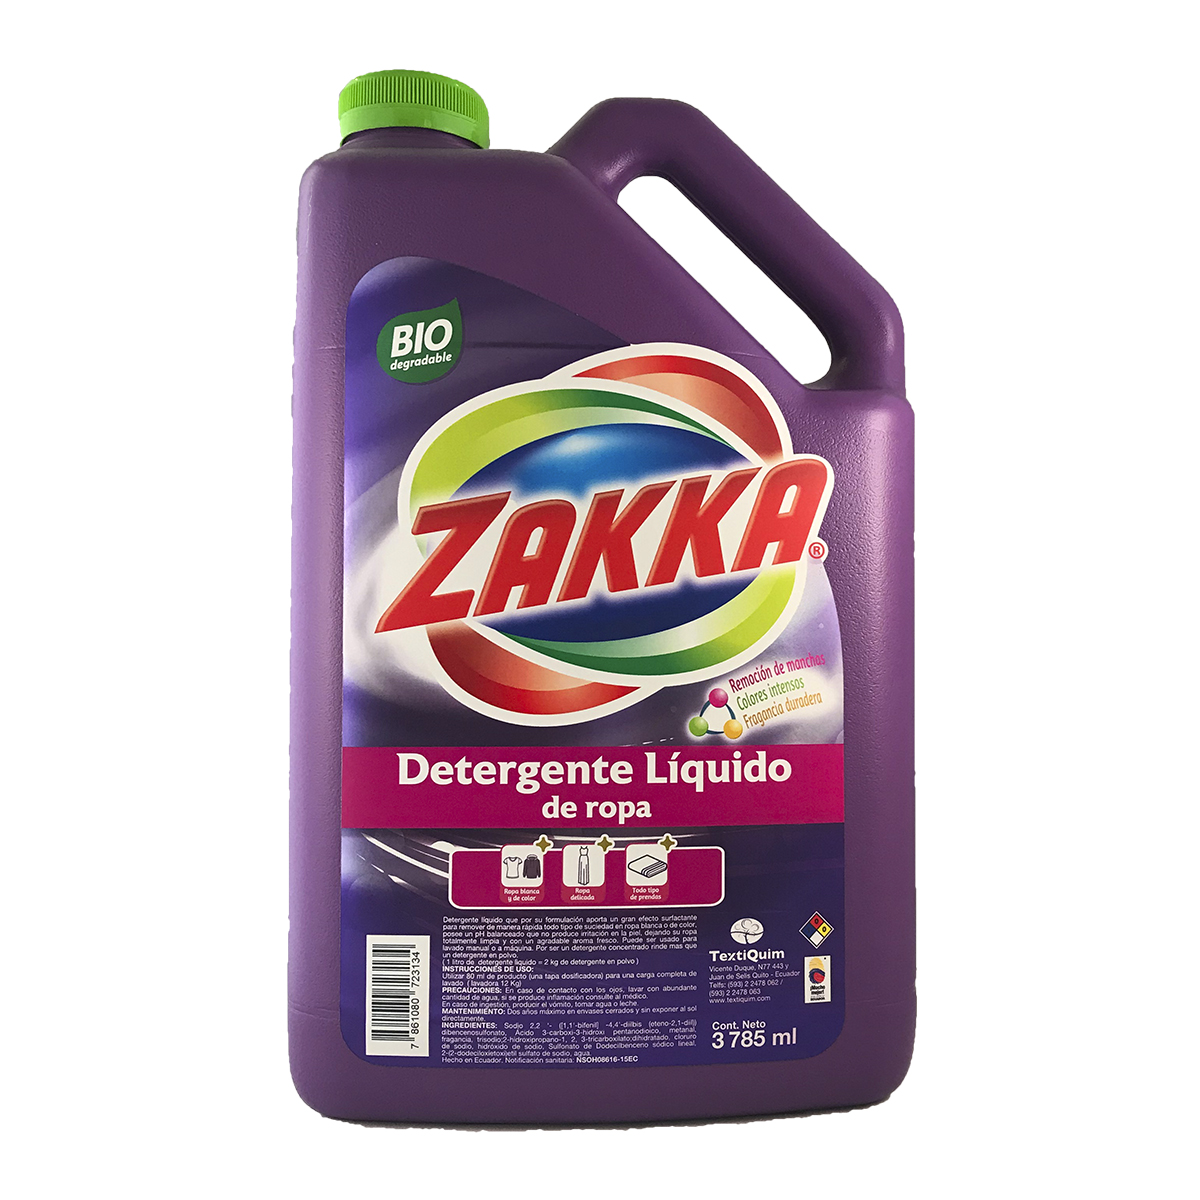 Detergente Liquido de ropa 3785ml